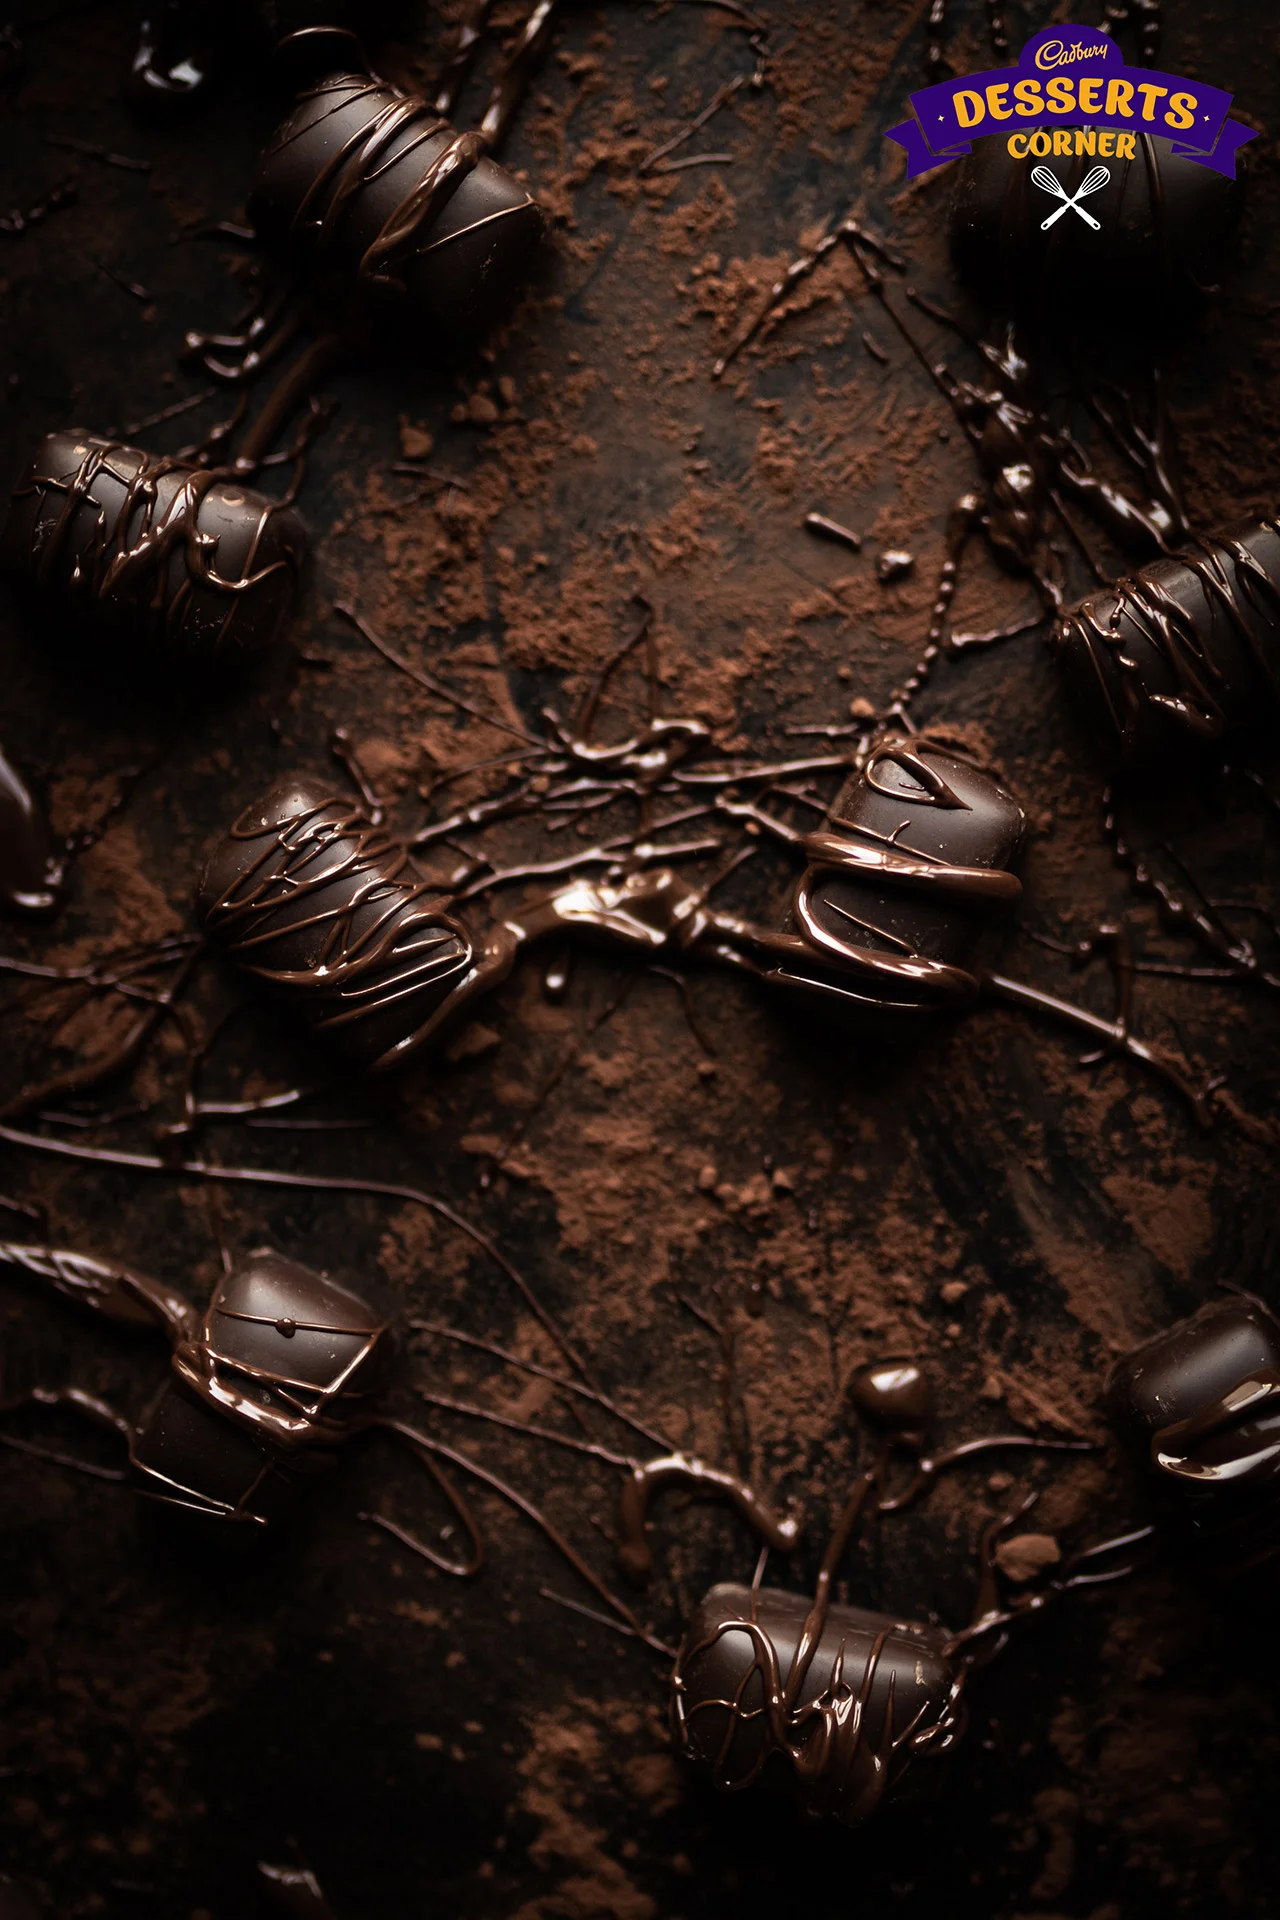 10 Delicious Dark Chocolate After-Dark Dessert Ideas For Your Halloween Party